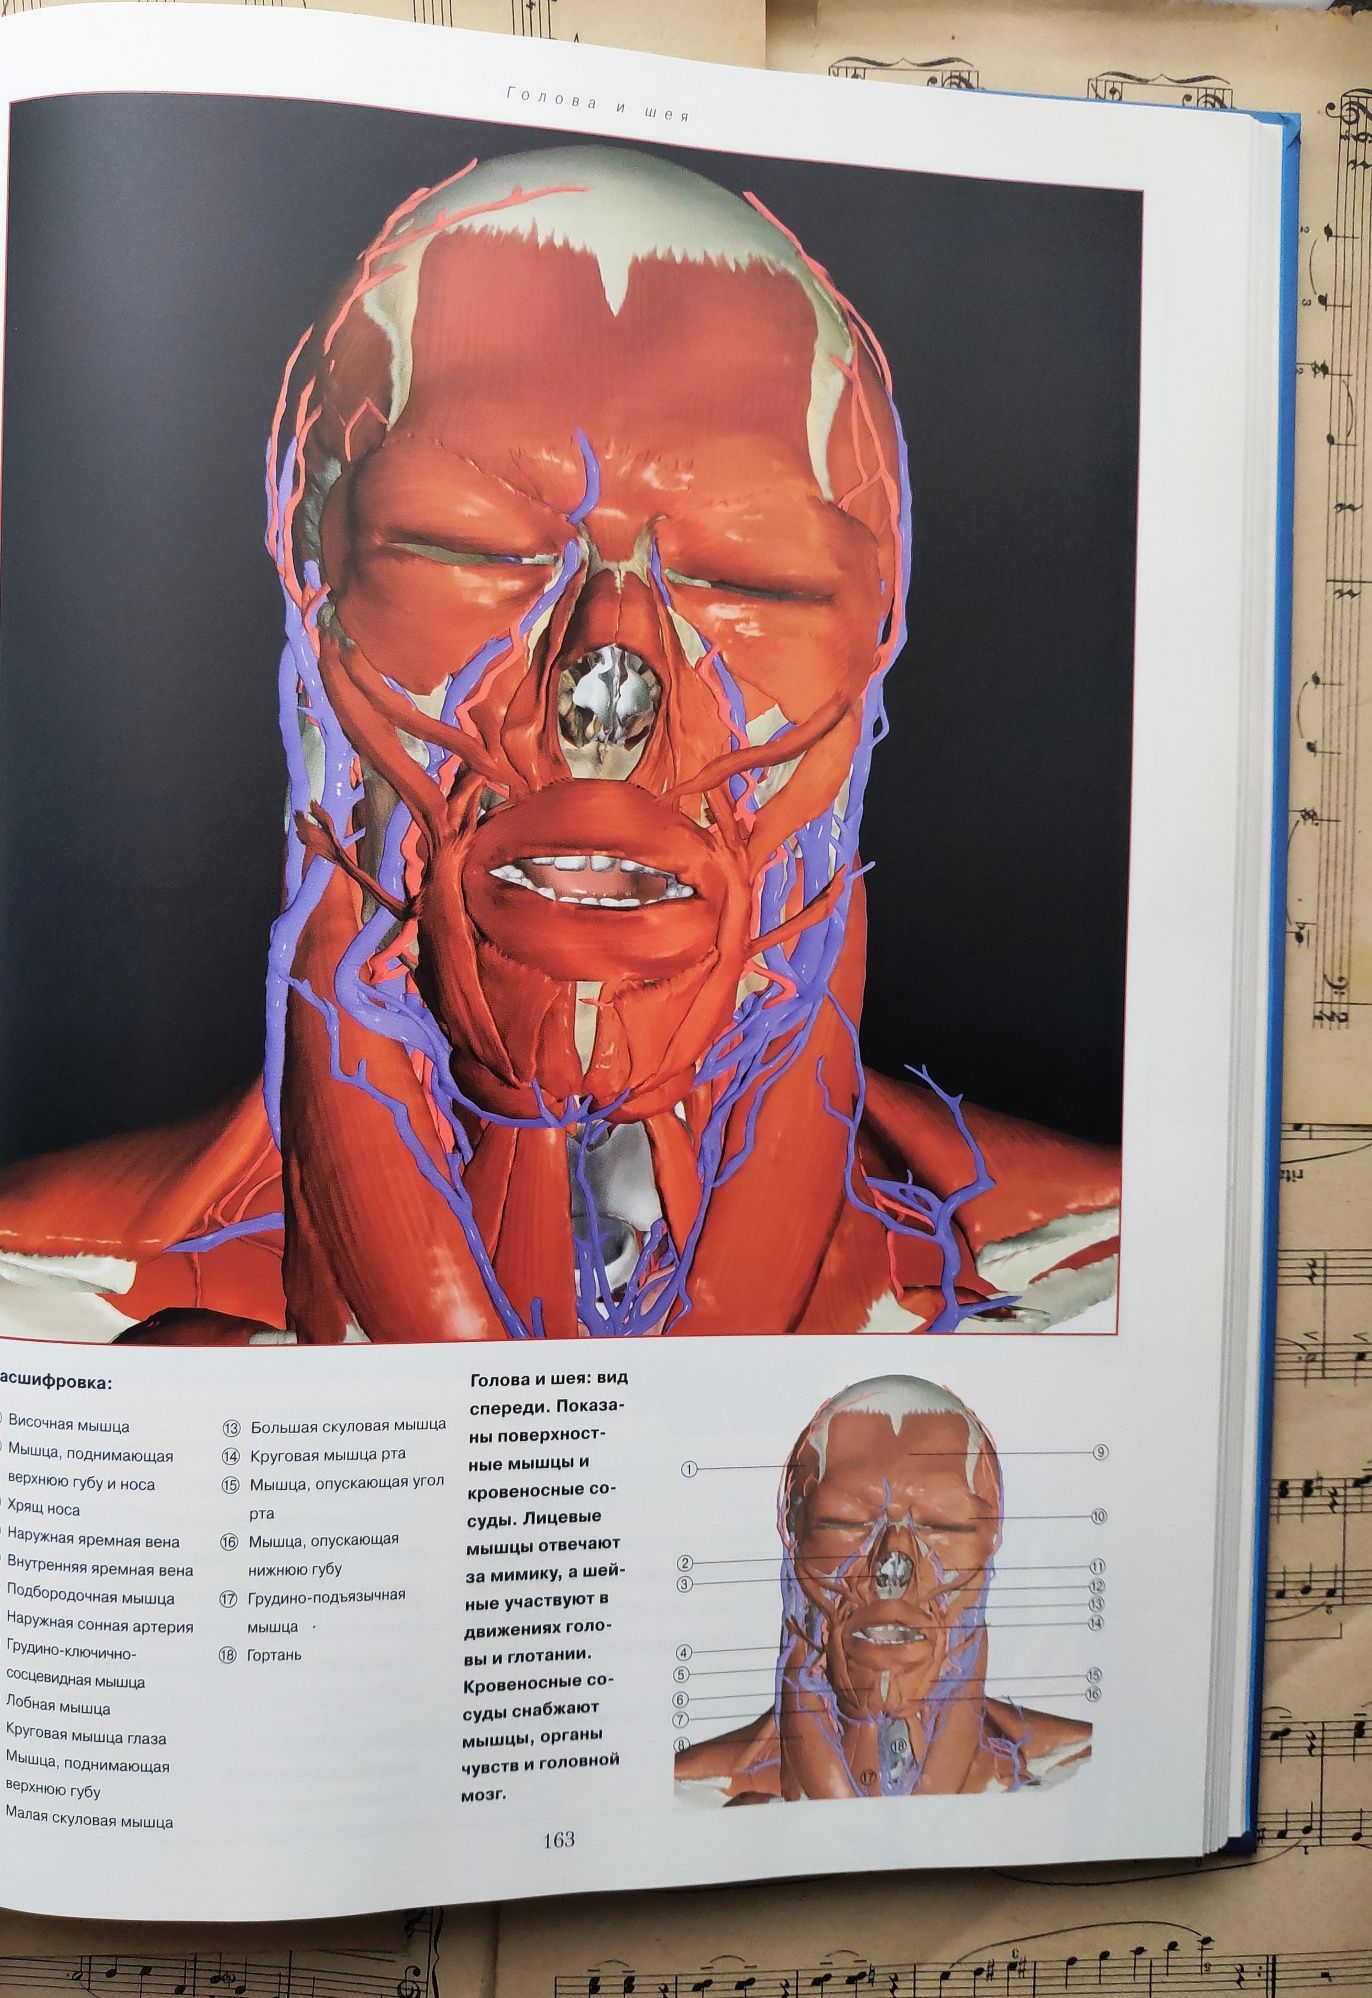 Новый атлас анатомии человека , Т.Маккрекен, Р.Уолкер 335x250x25